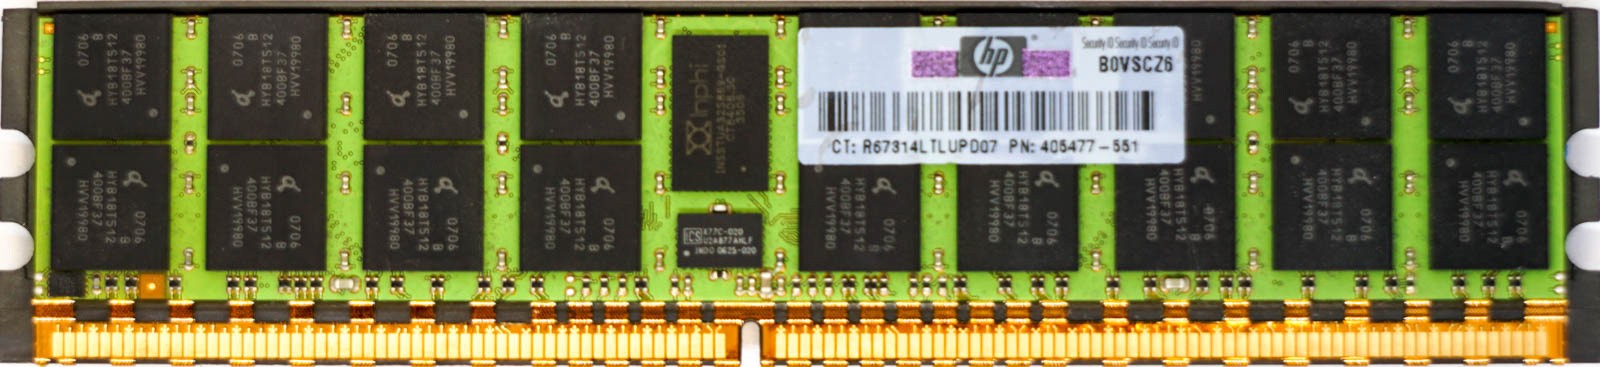 HP (405477-551) - 4GB PC2-4200P (DDR2-533Mhz, 4RX4)